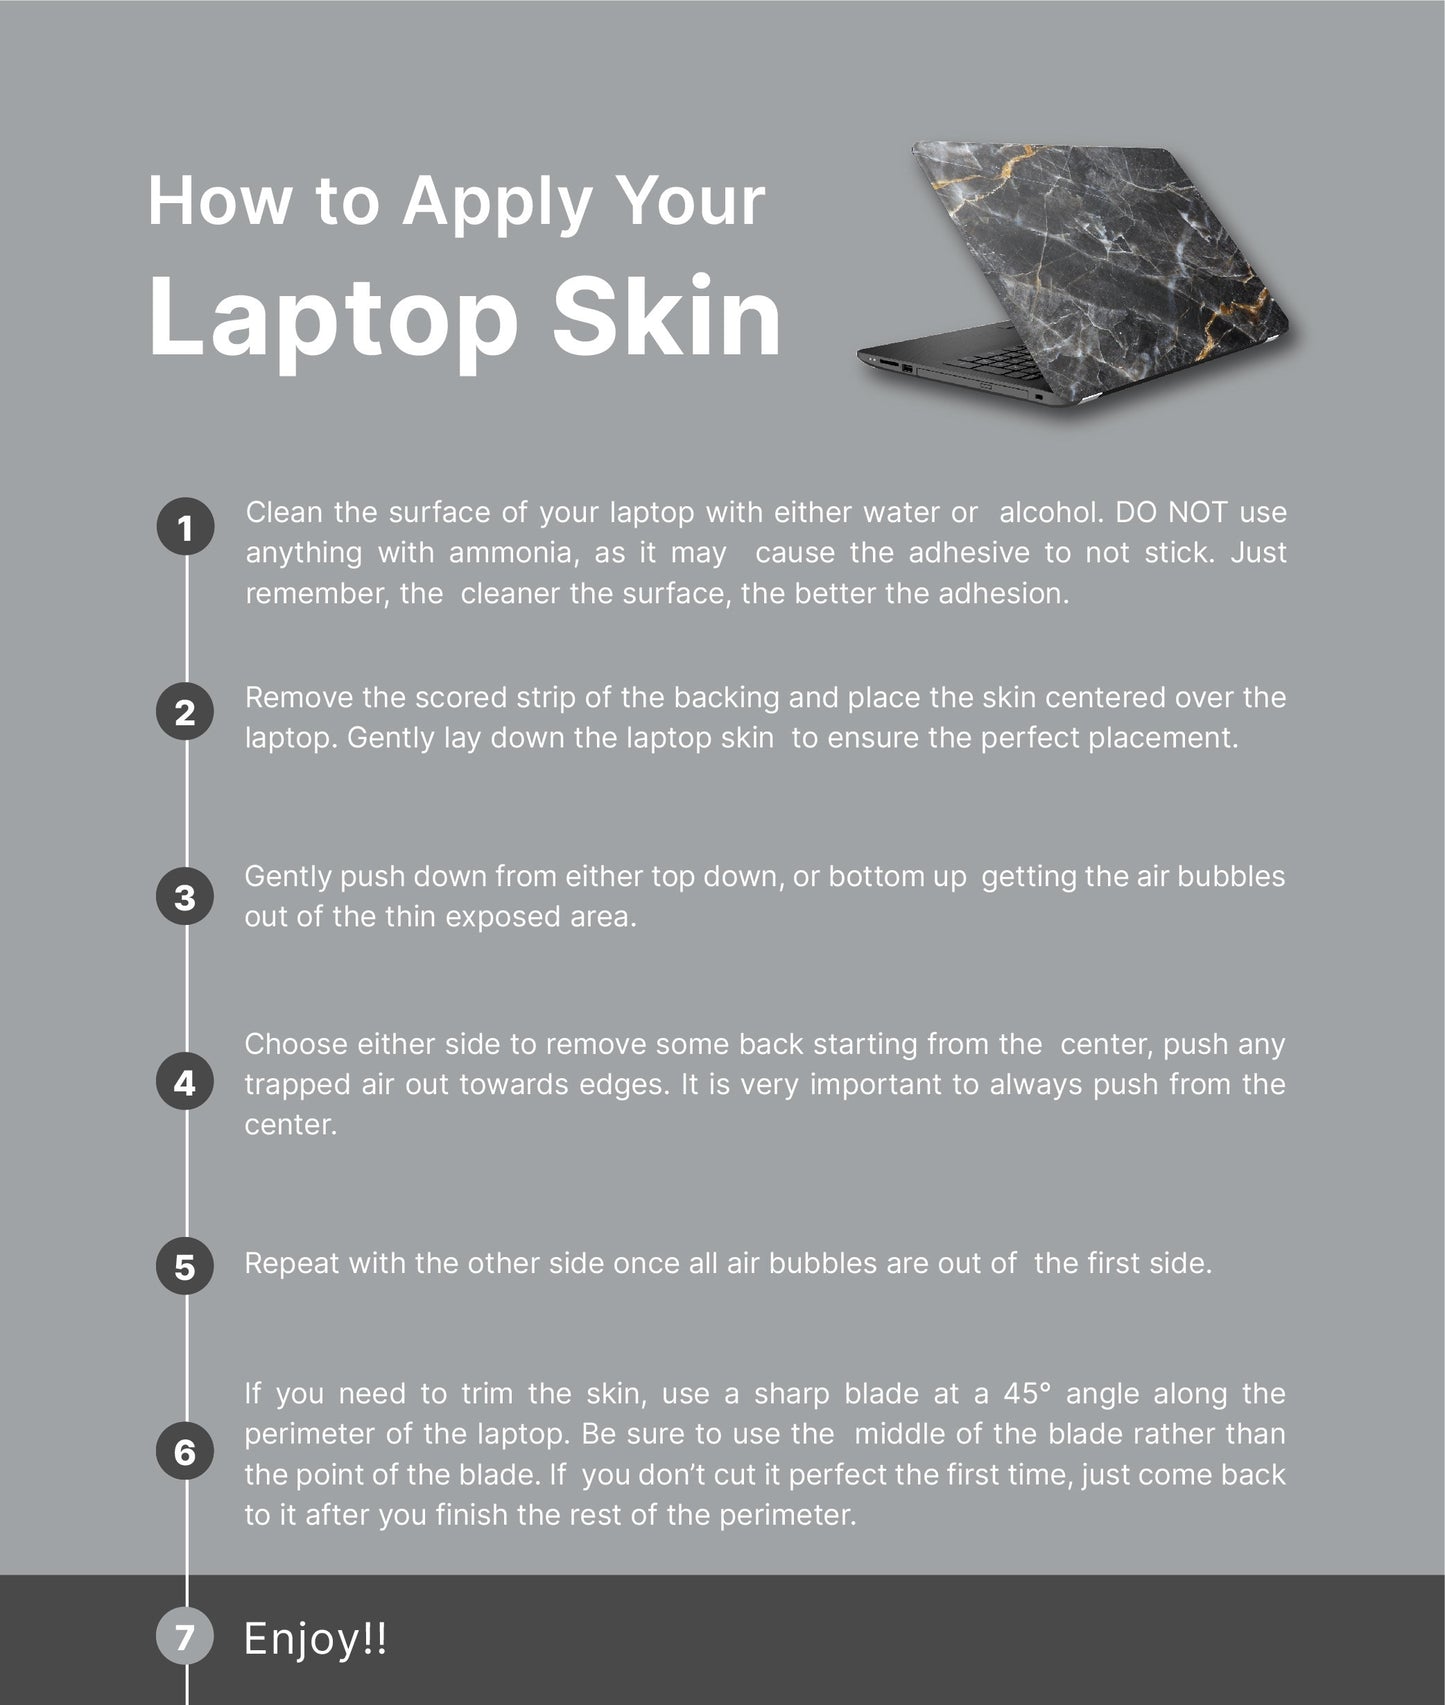 Floral Laptop Skin, Laptop Cover, Laptop Skins, Removable Laptop Skins, Laptop Decal, Customized Laptop Skin, Laptop Stickers 346